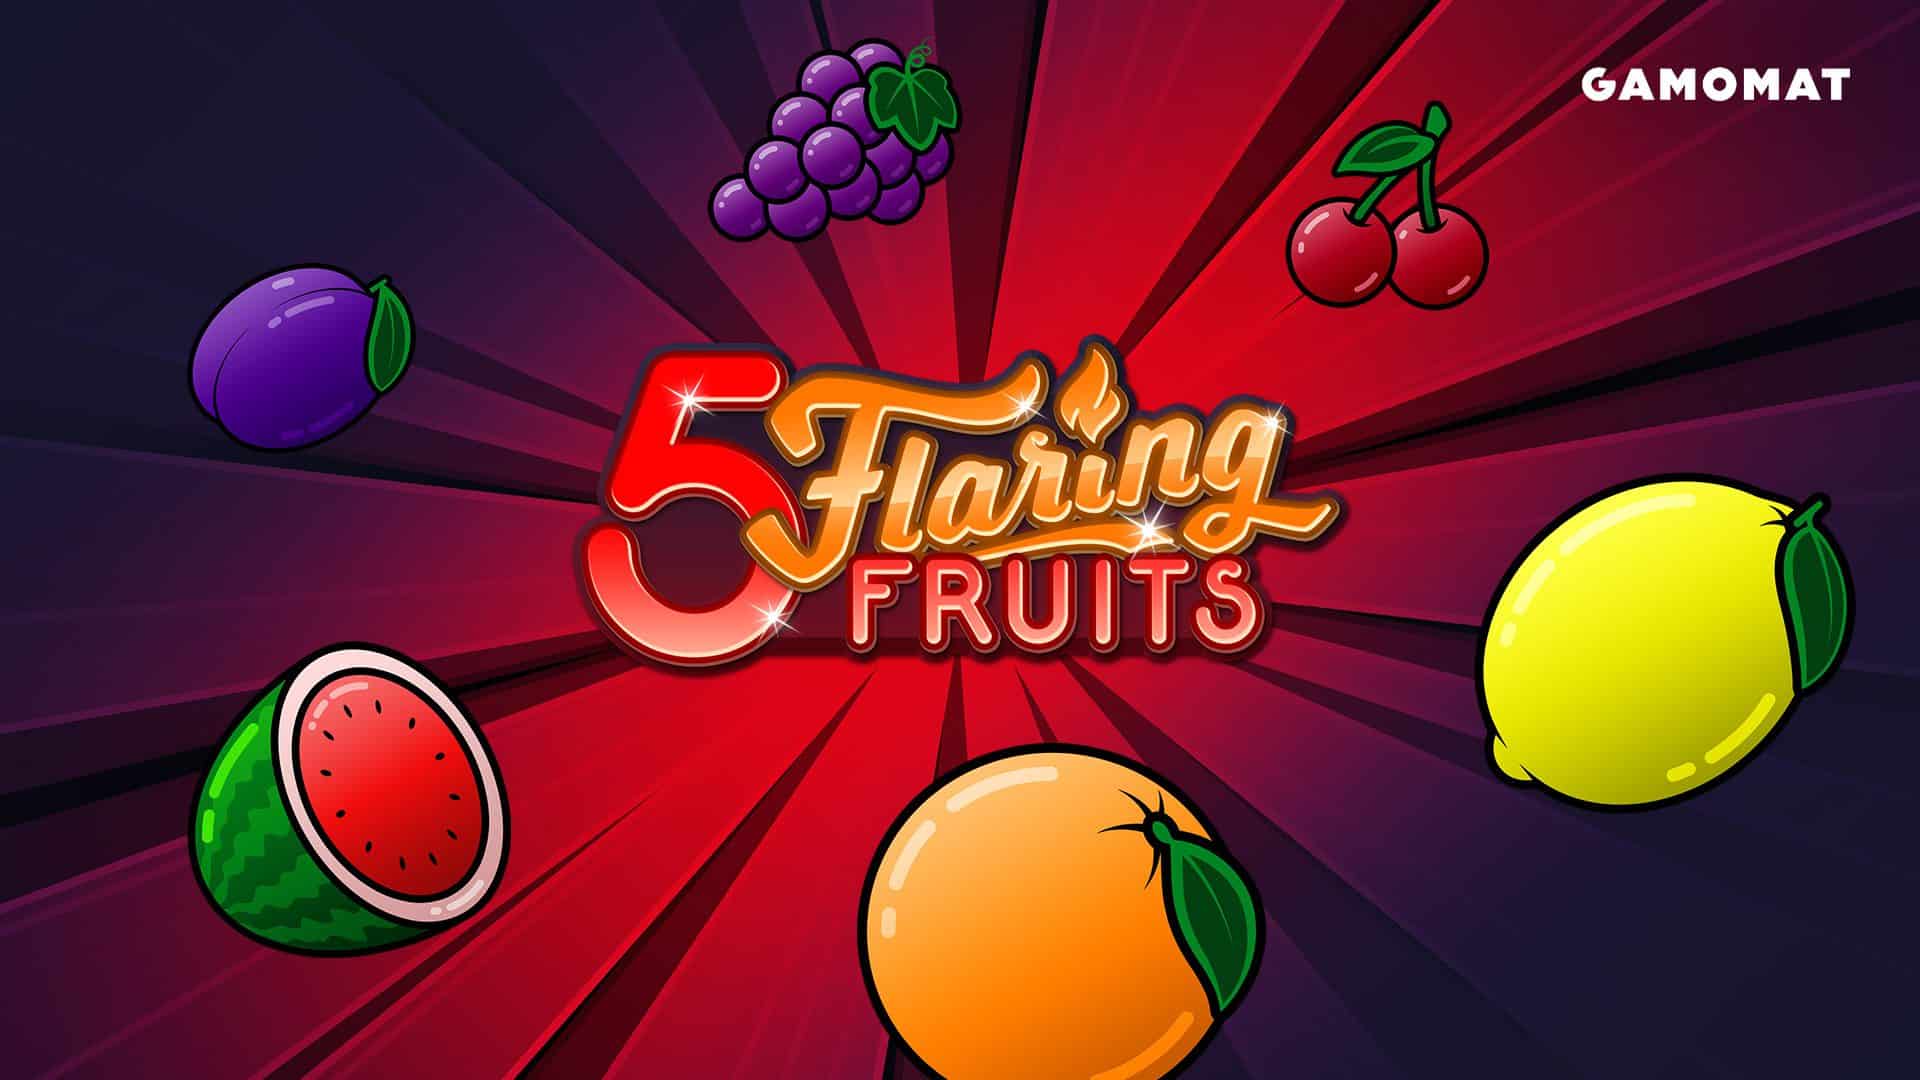 5 Flaring Fruits slot cover image